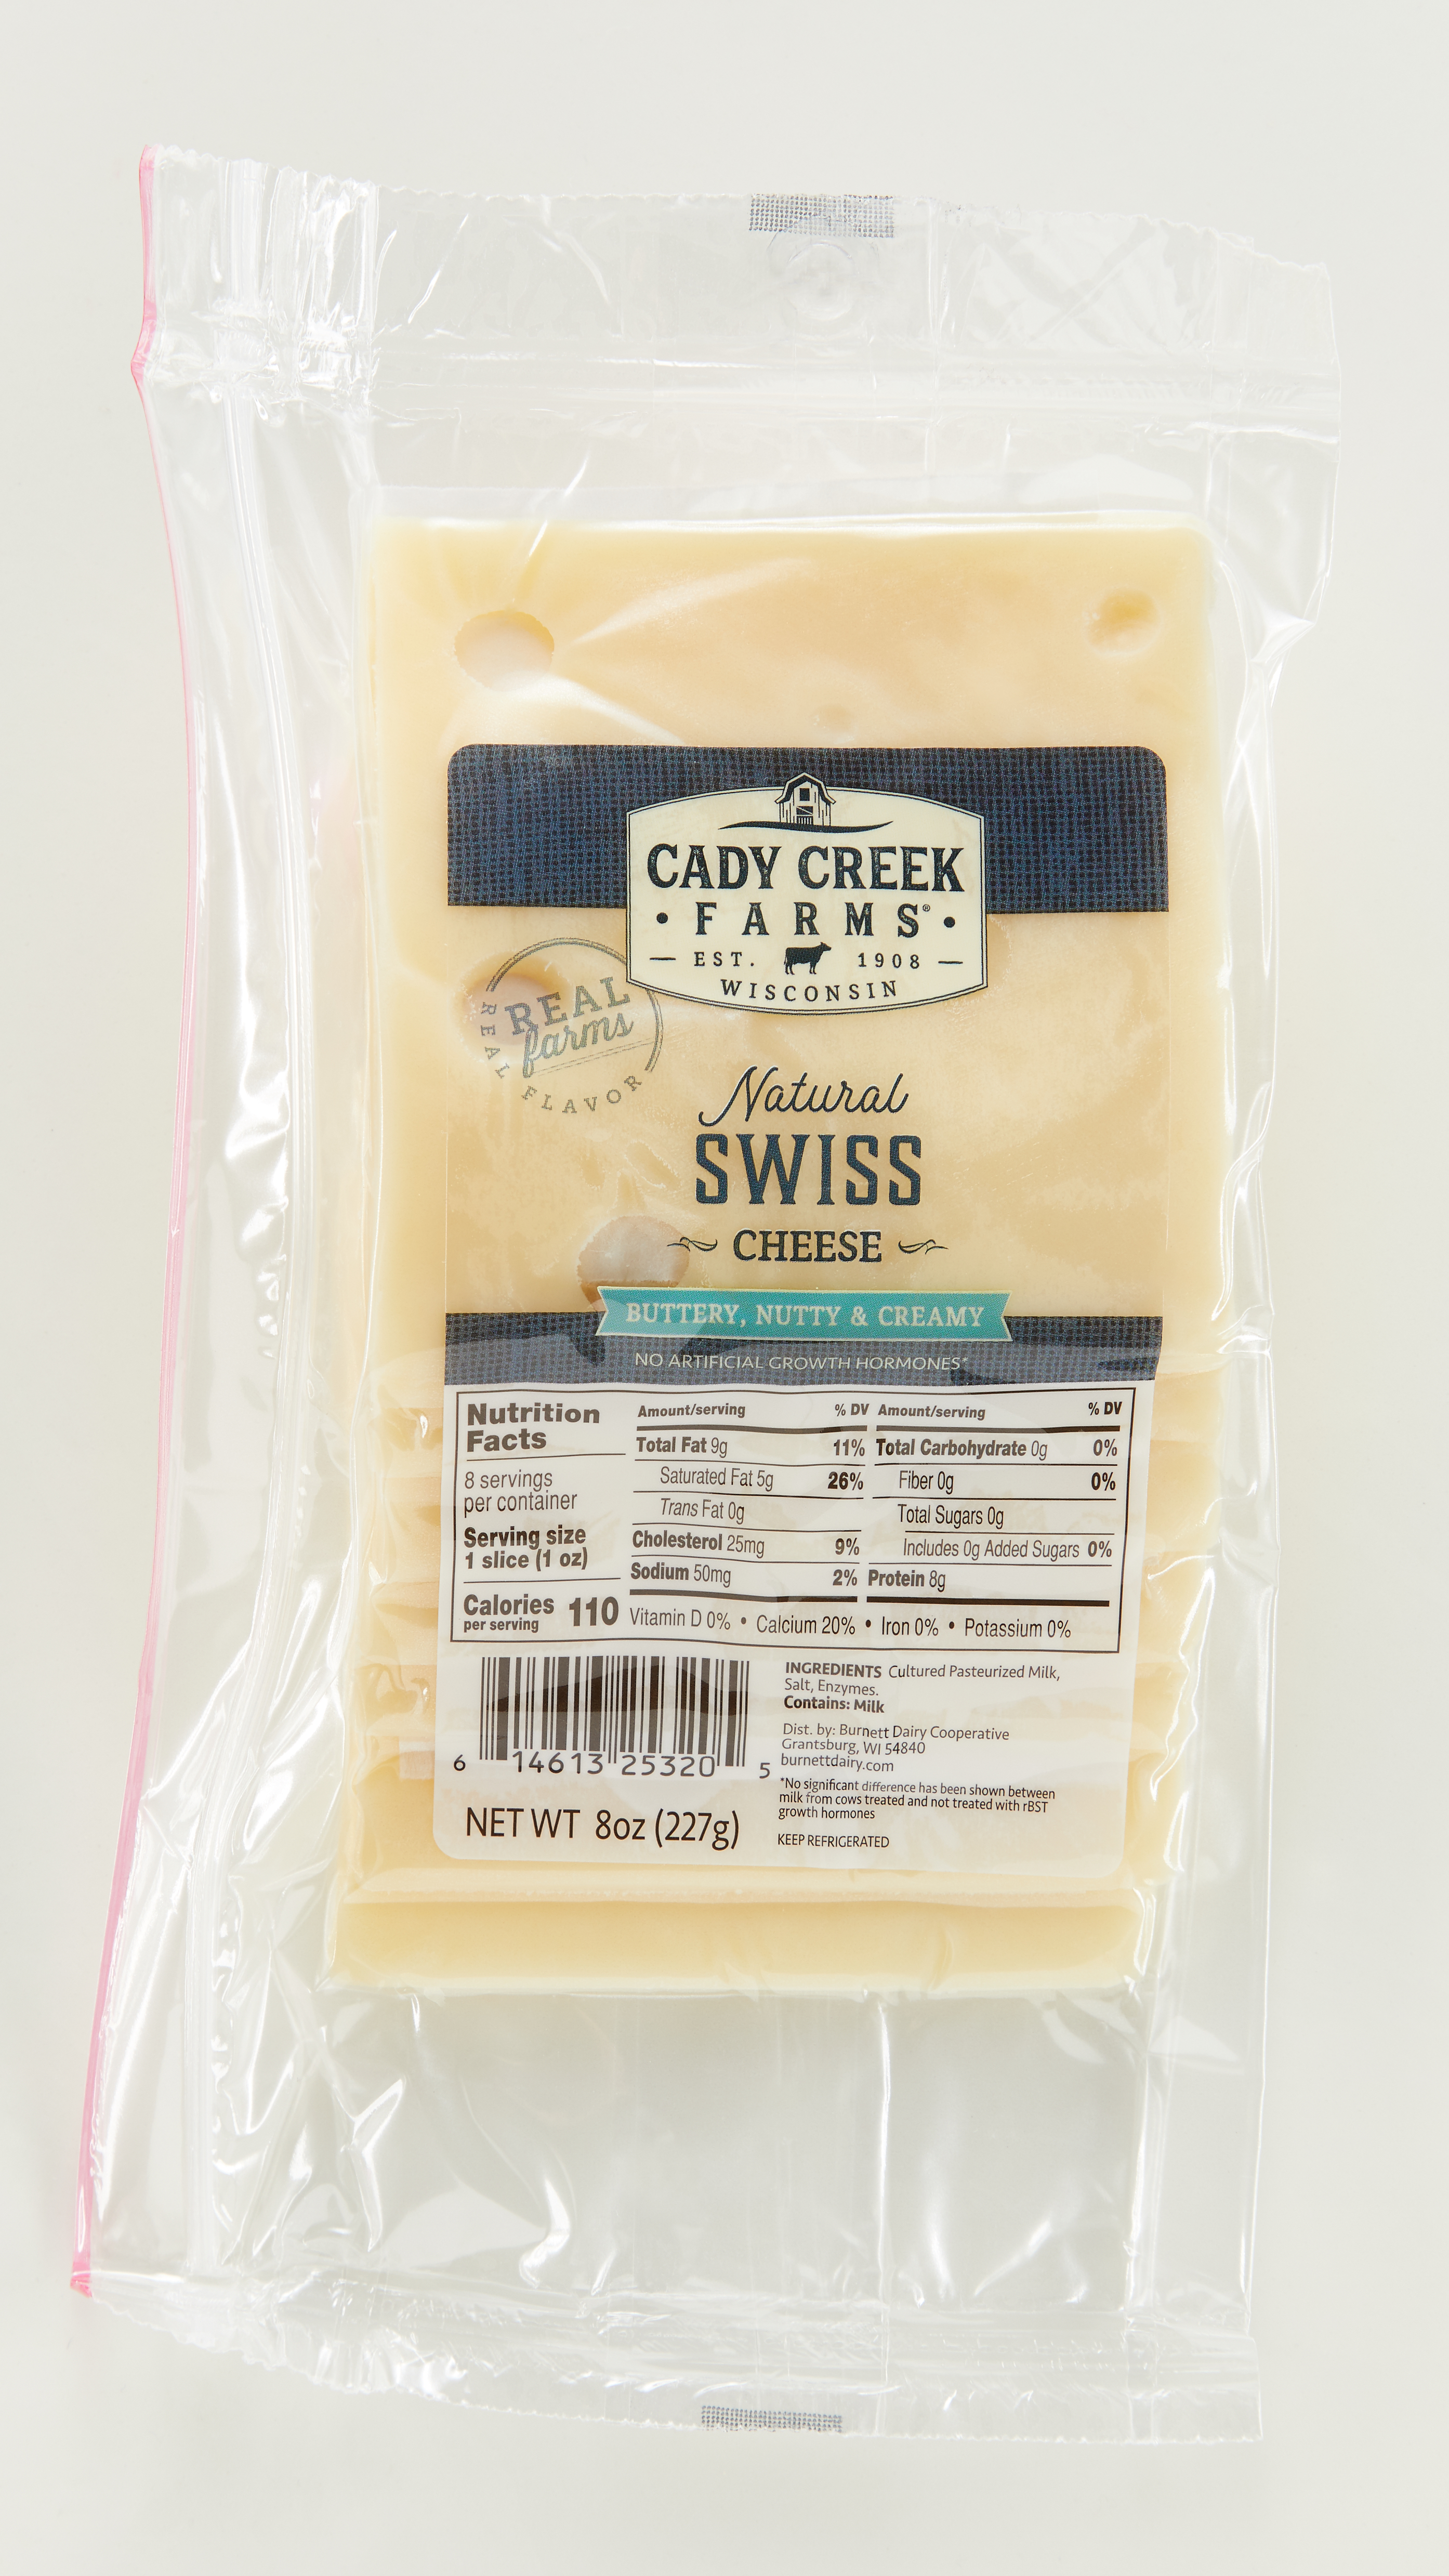 Cady Creek Farms 8 oz Swiss slice in package